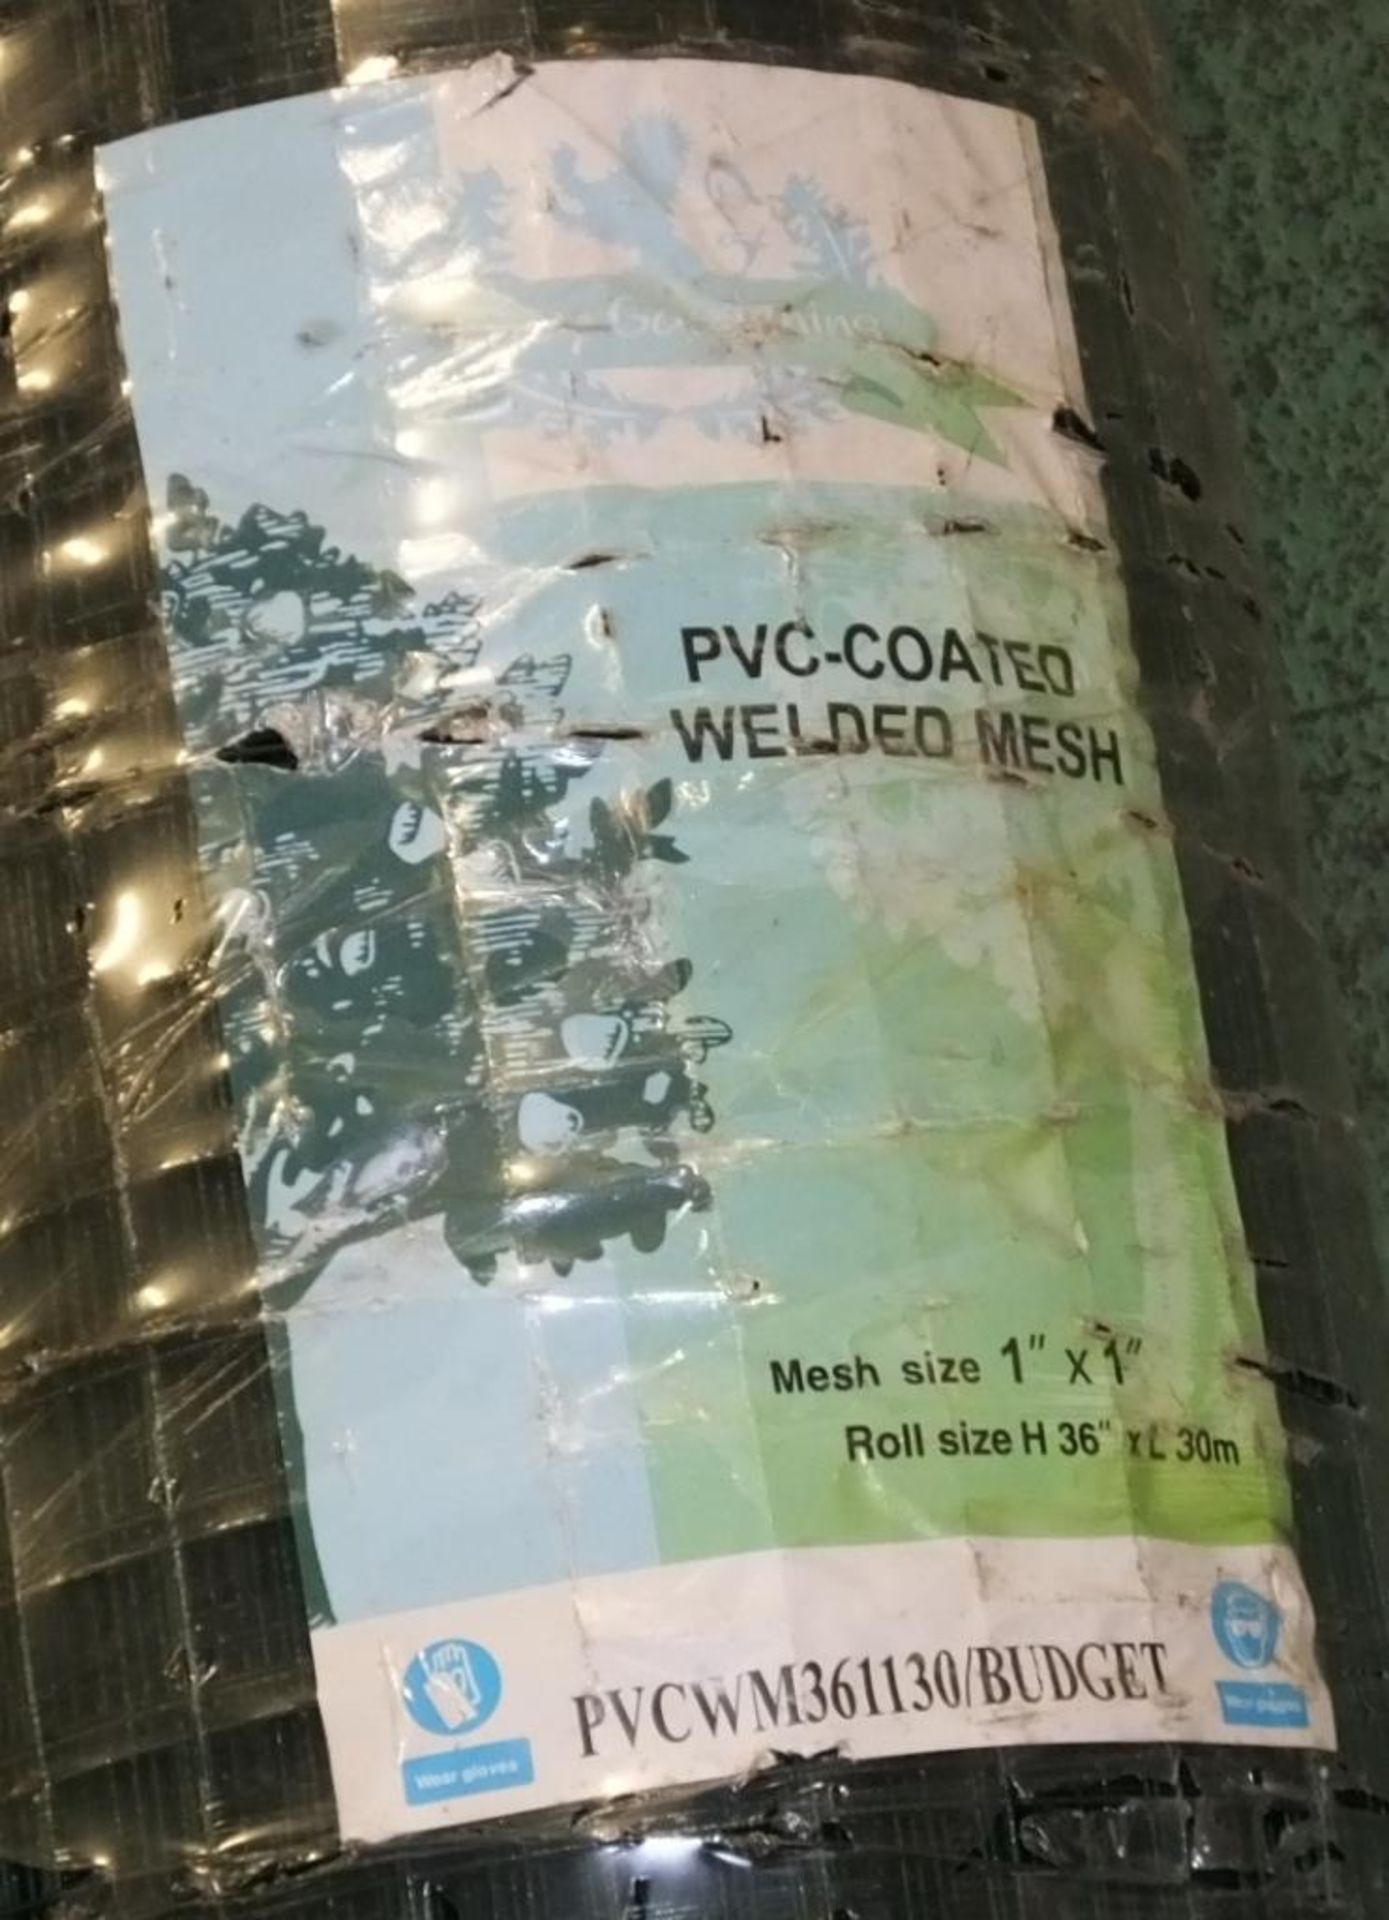 PVC Coated Welded Mesh 36" x 30m. - Bild 3 aus 3